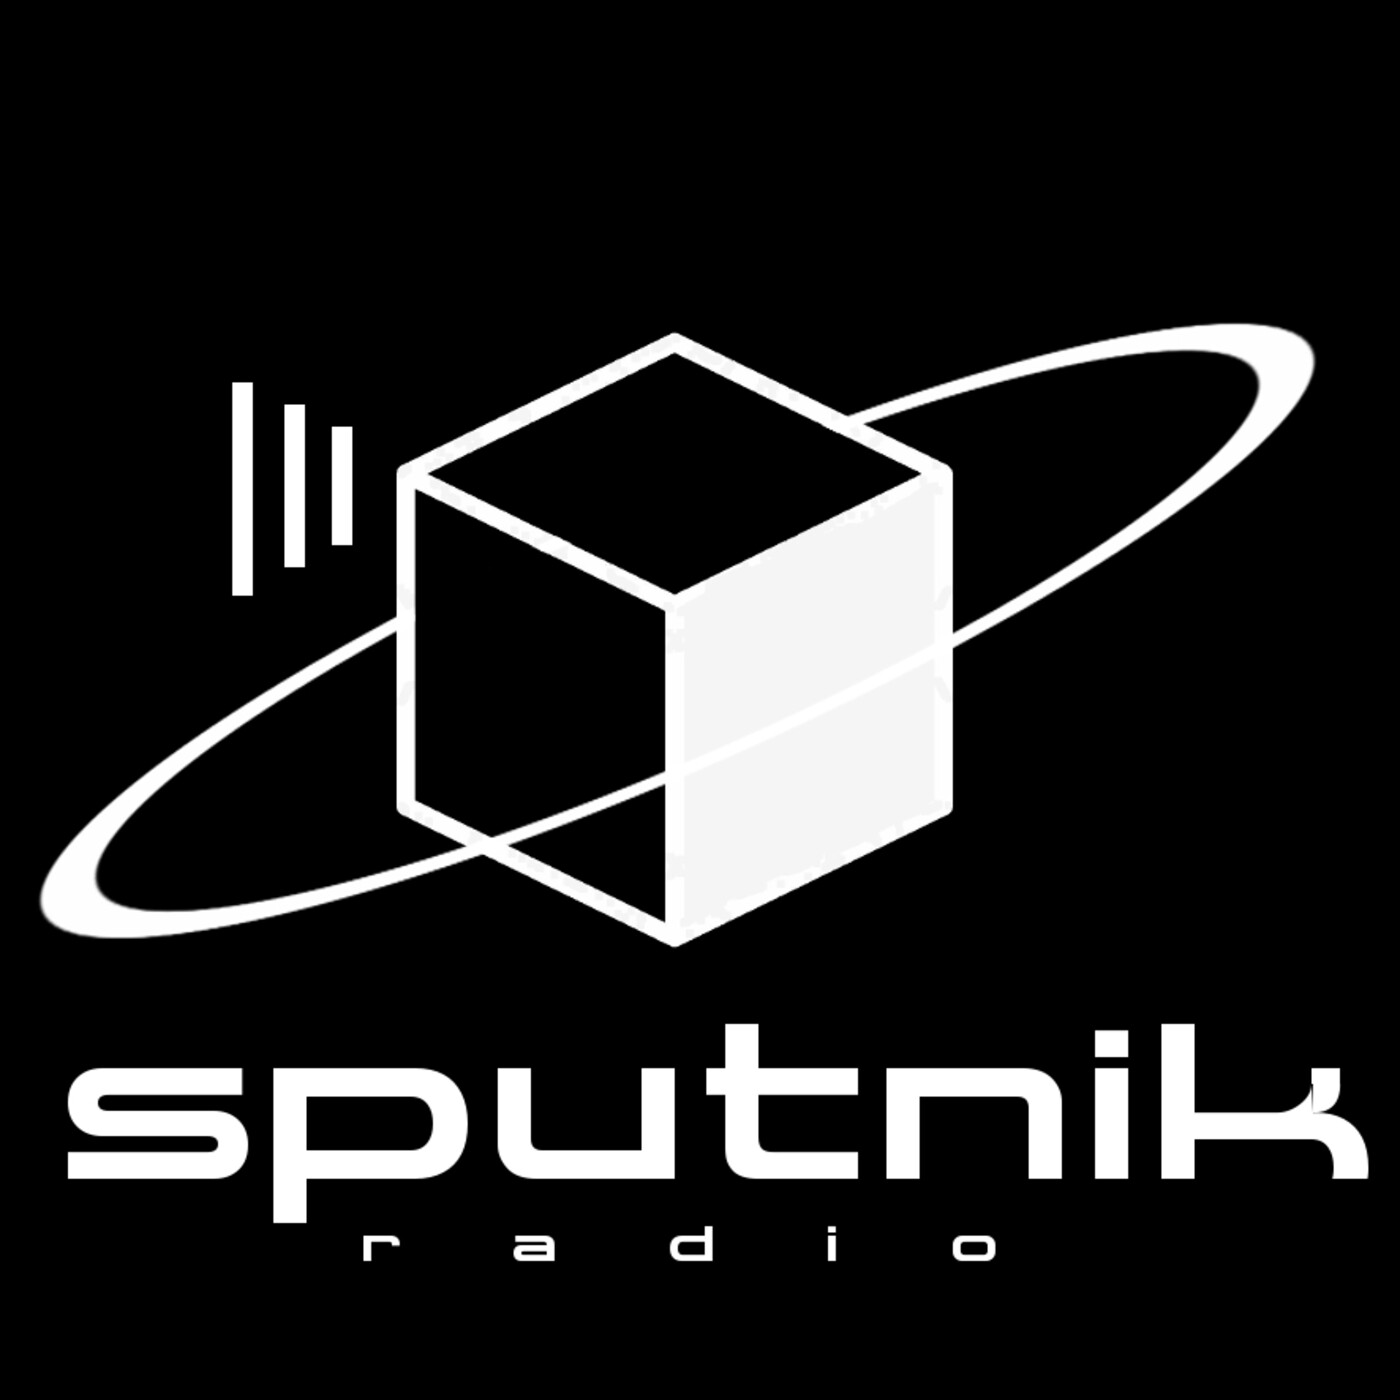 Sputnik Launch - Rojonesta 06/02/2021